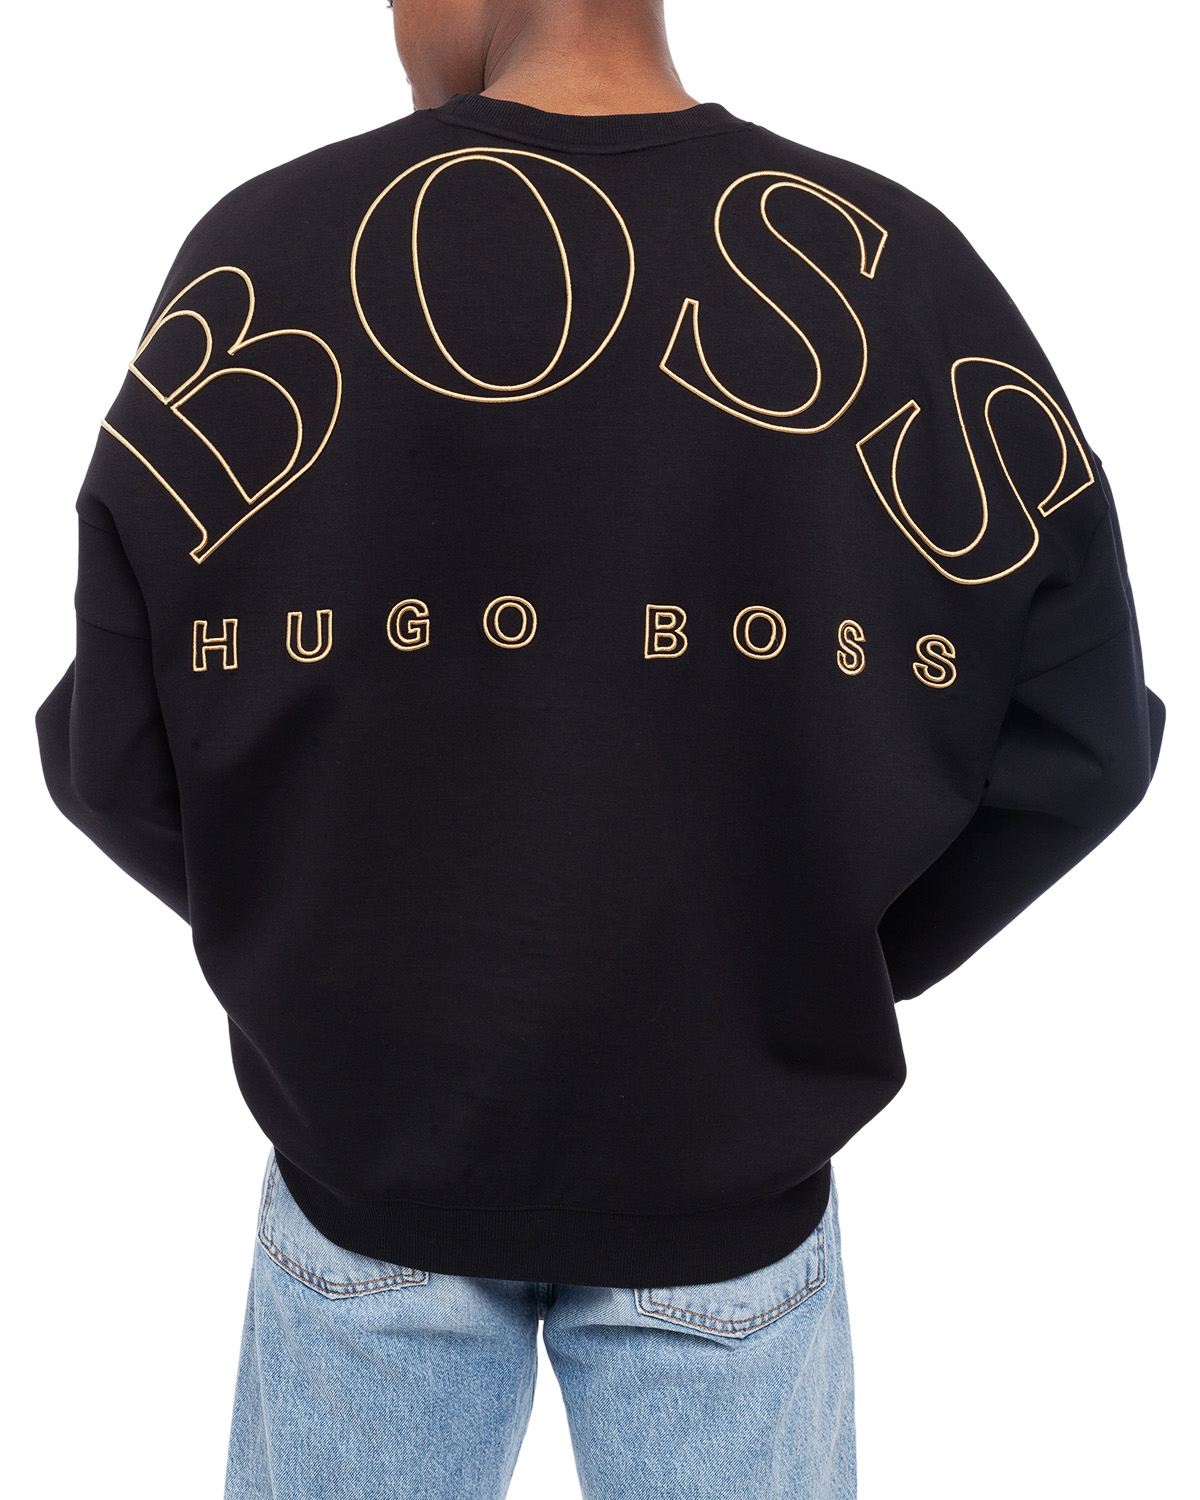 hugo boss sweatshirt black and gold OFF 